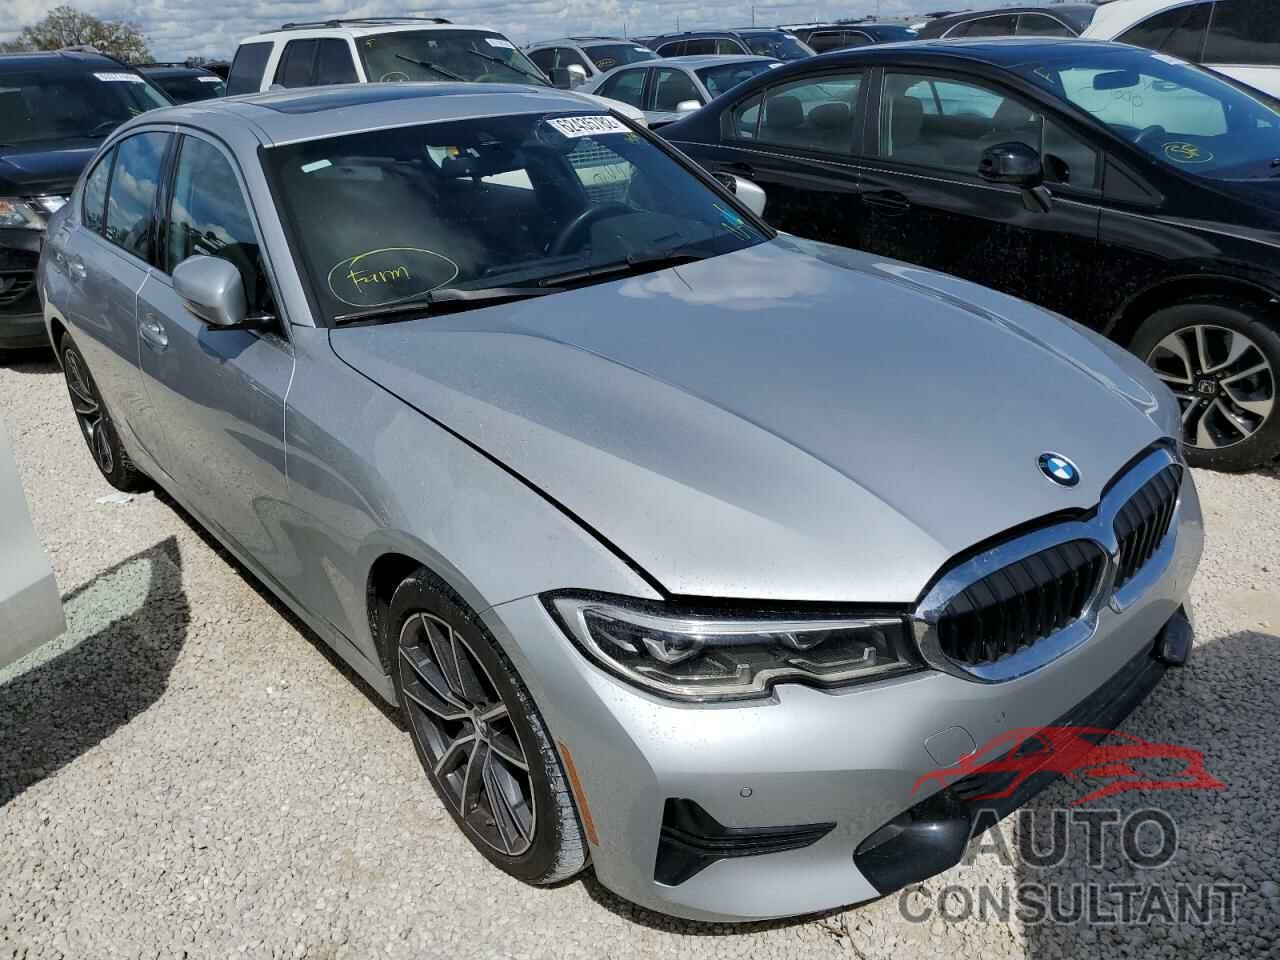 BMW 3 SERIES 2019 - WBA5R7C53KFH12076